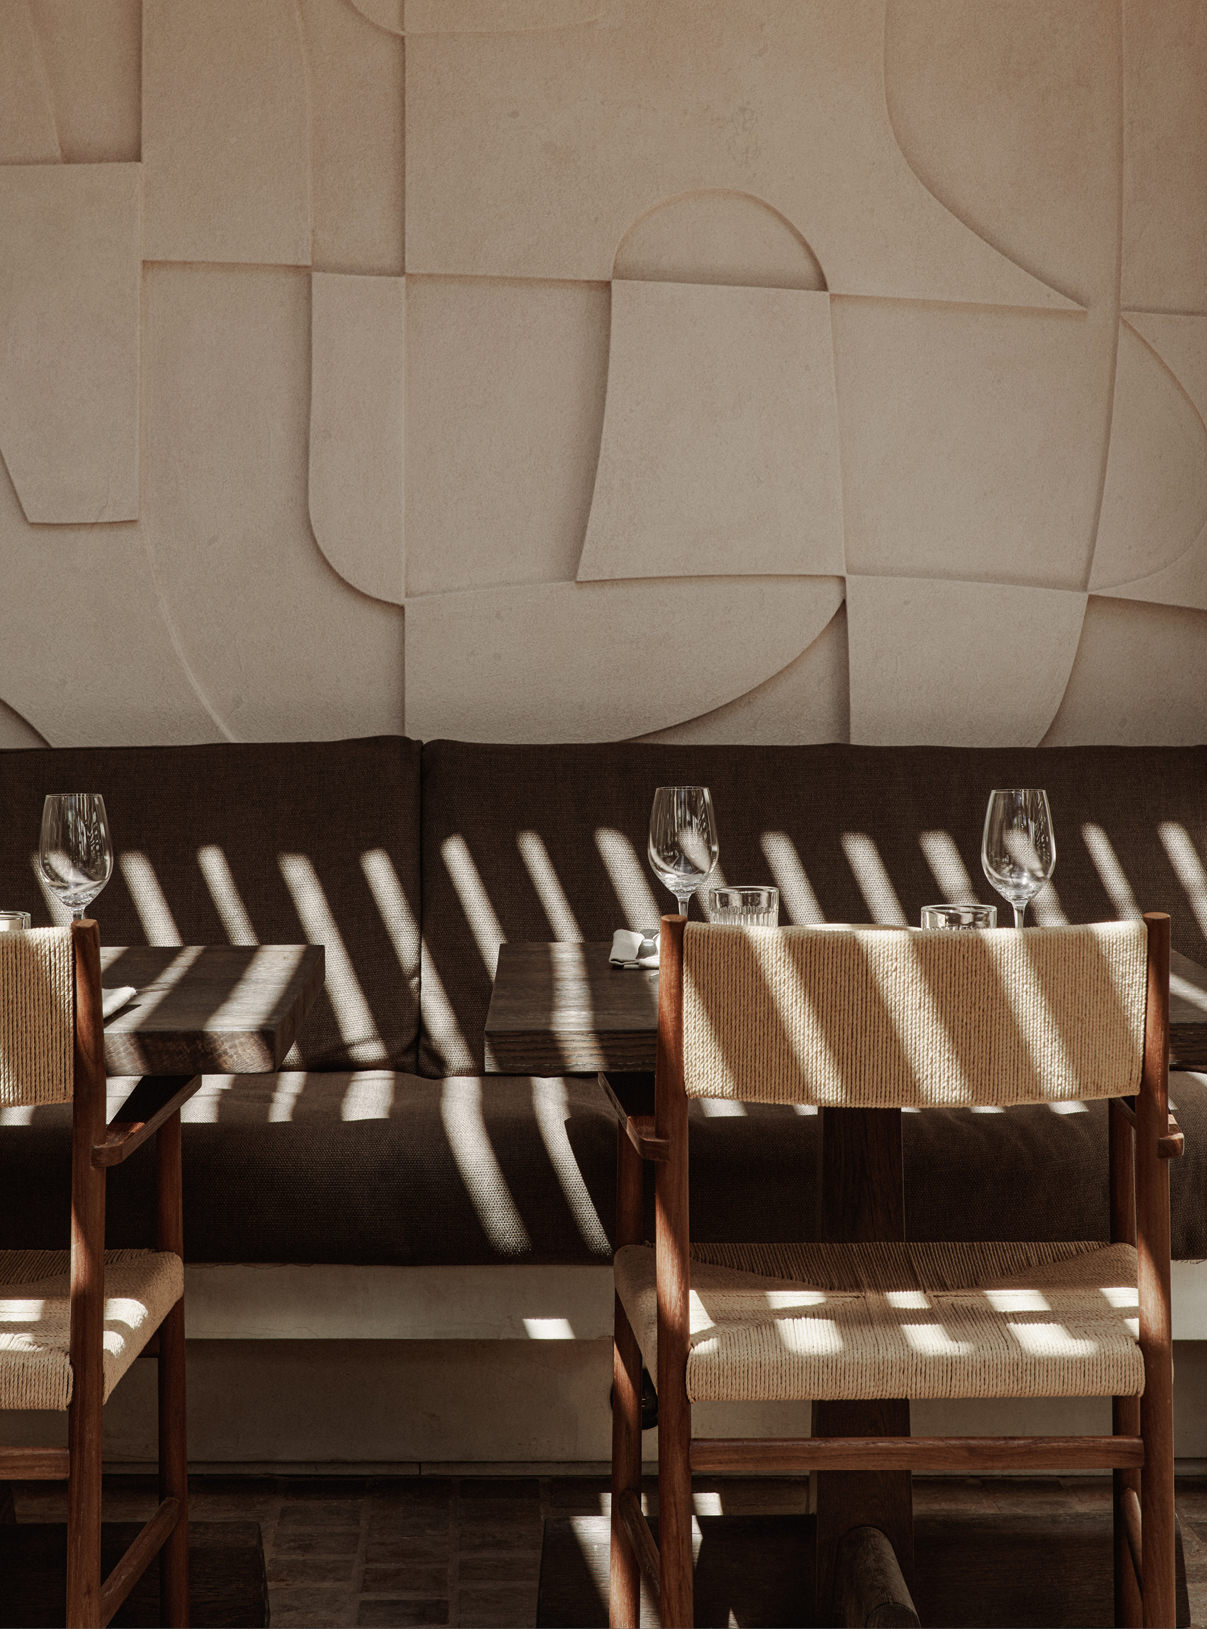 Noema Restaurant & Bar Mykonos designed by Lambs and Lions Berlin, Interior design